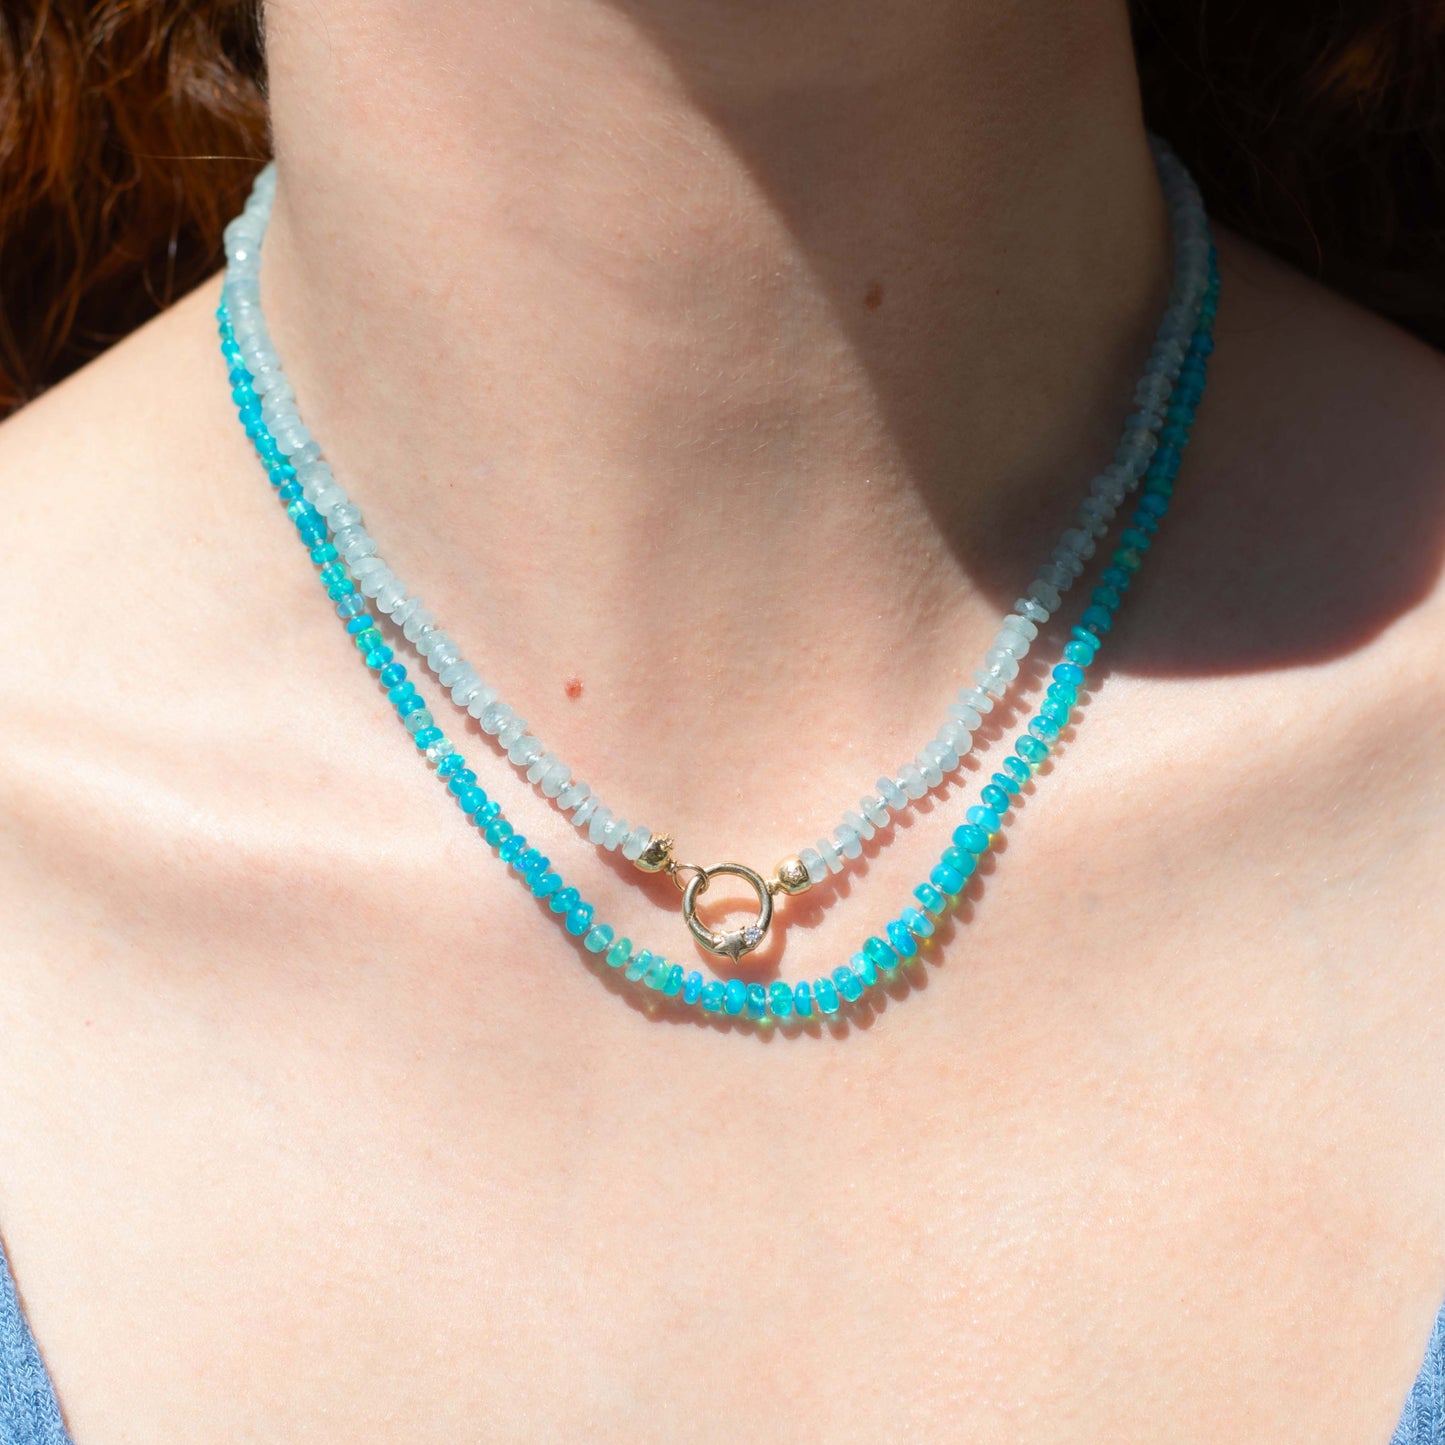 Blue Opal Beaded Necklace with Grey Silk Thread